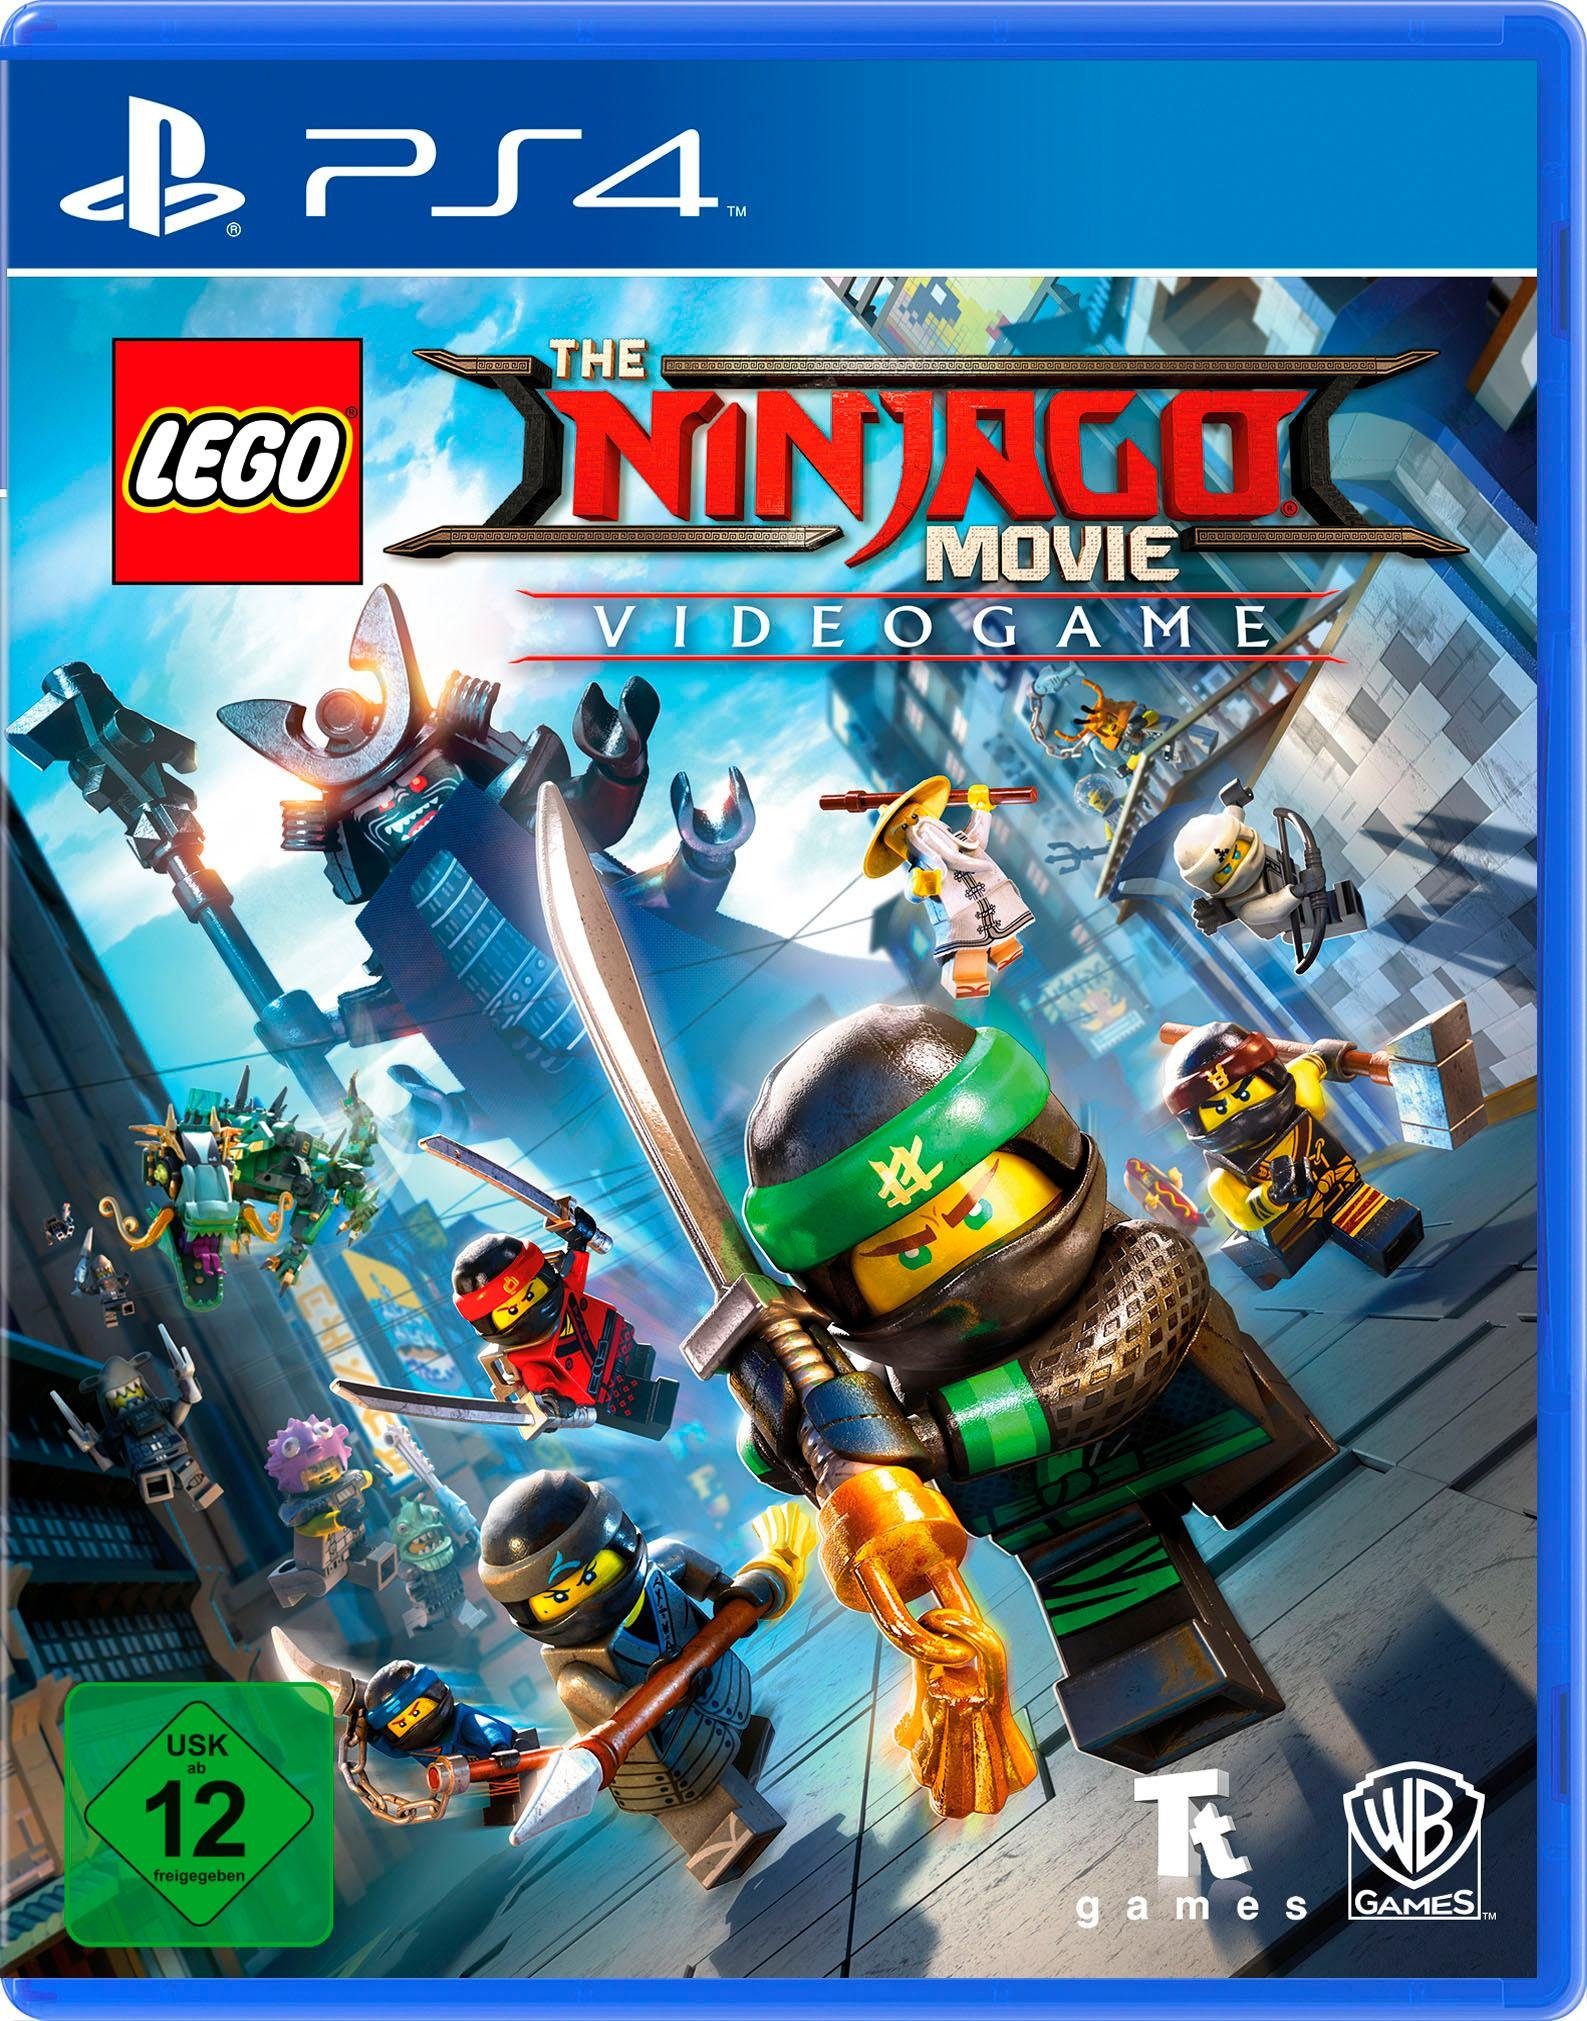 LEGO Software 4, The PlayStation Games Movie Warner Pyramide Videogame